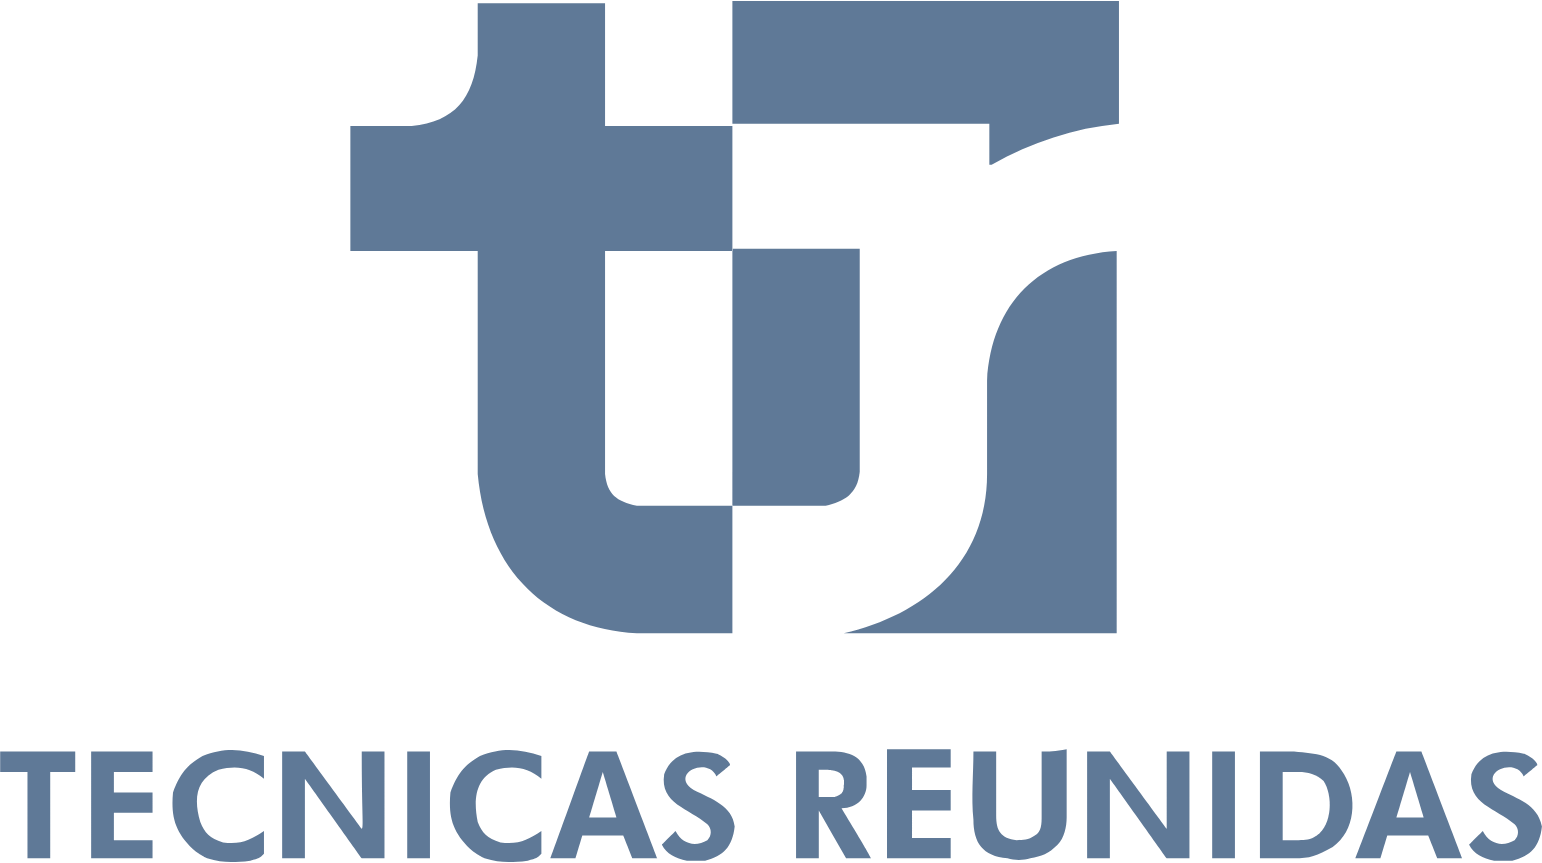 Técnicas Reunidas logo large (transparent PNG)